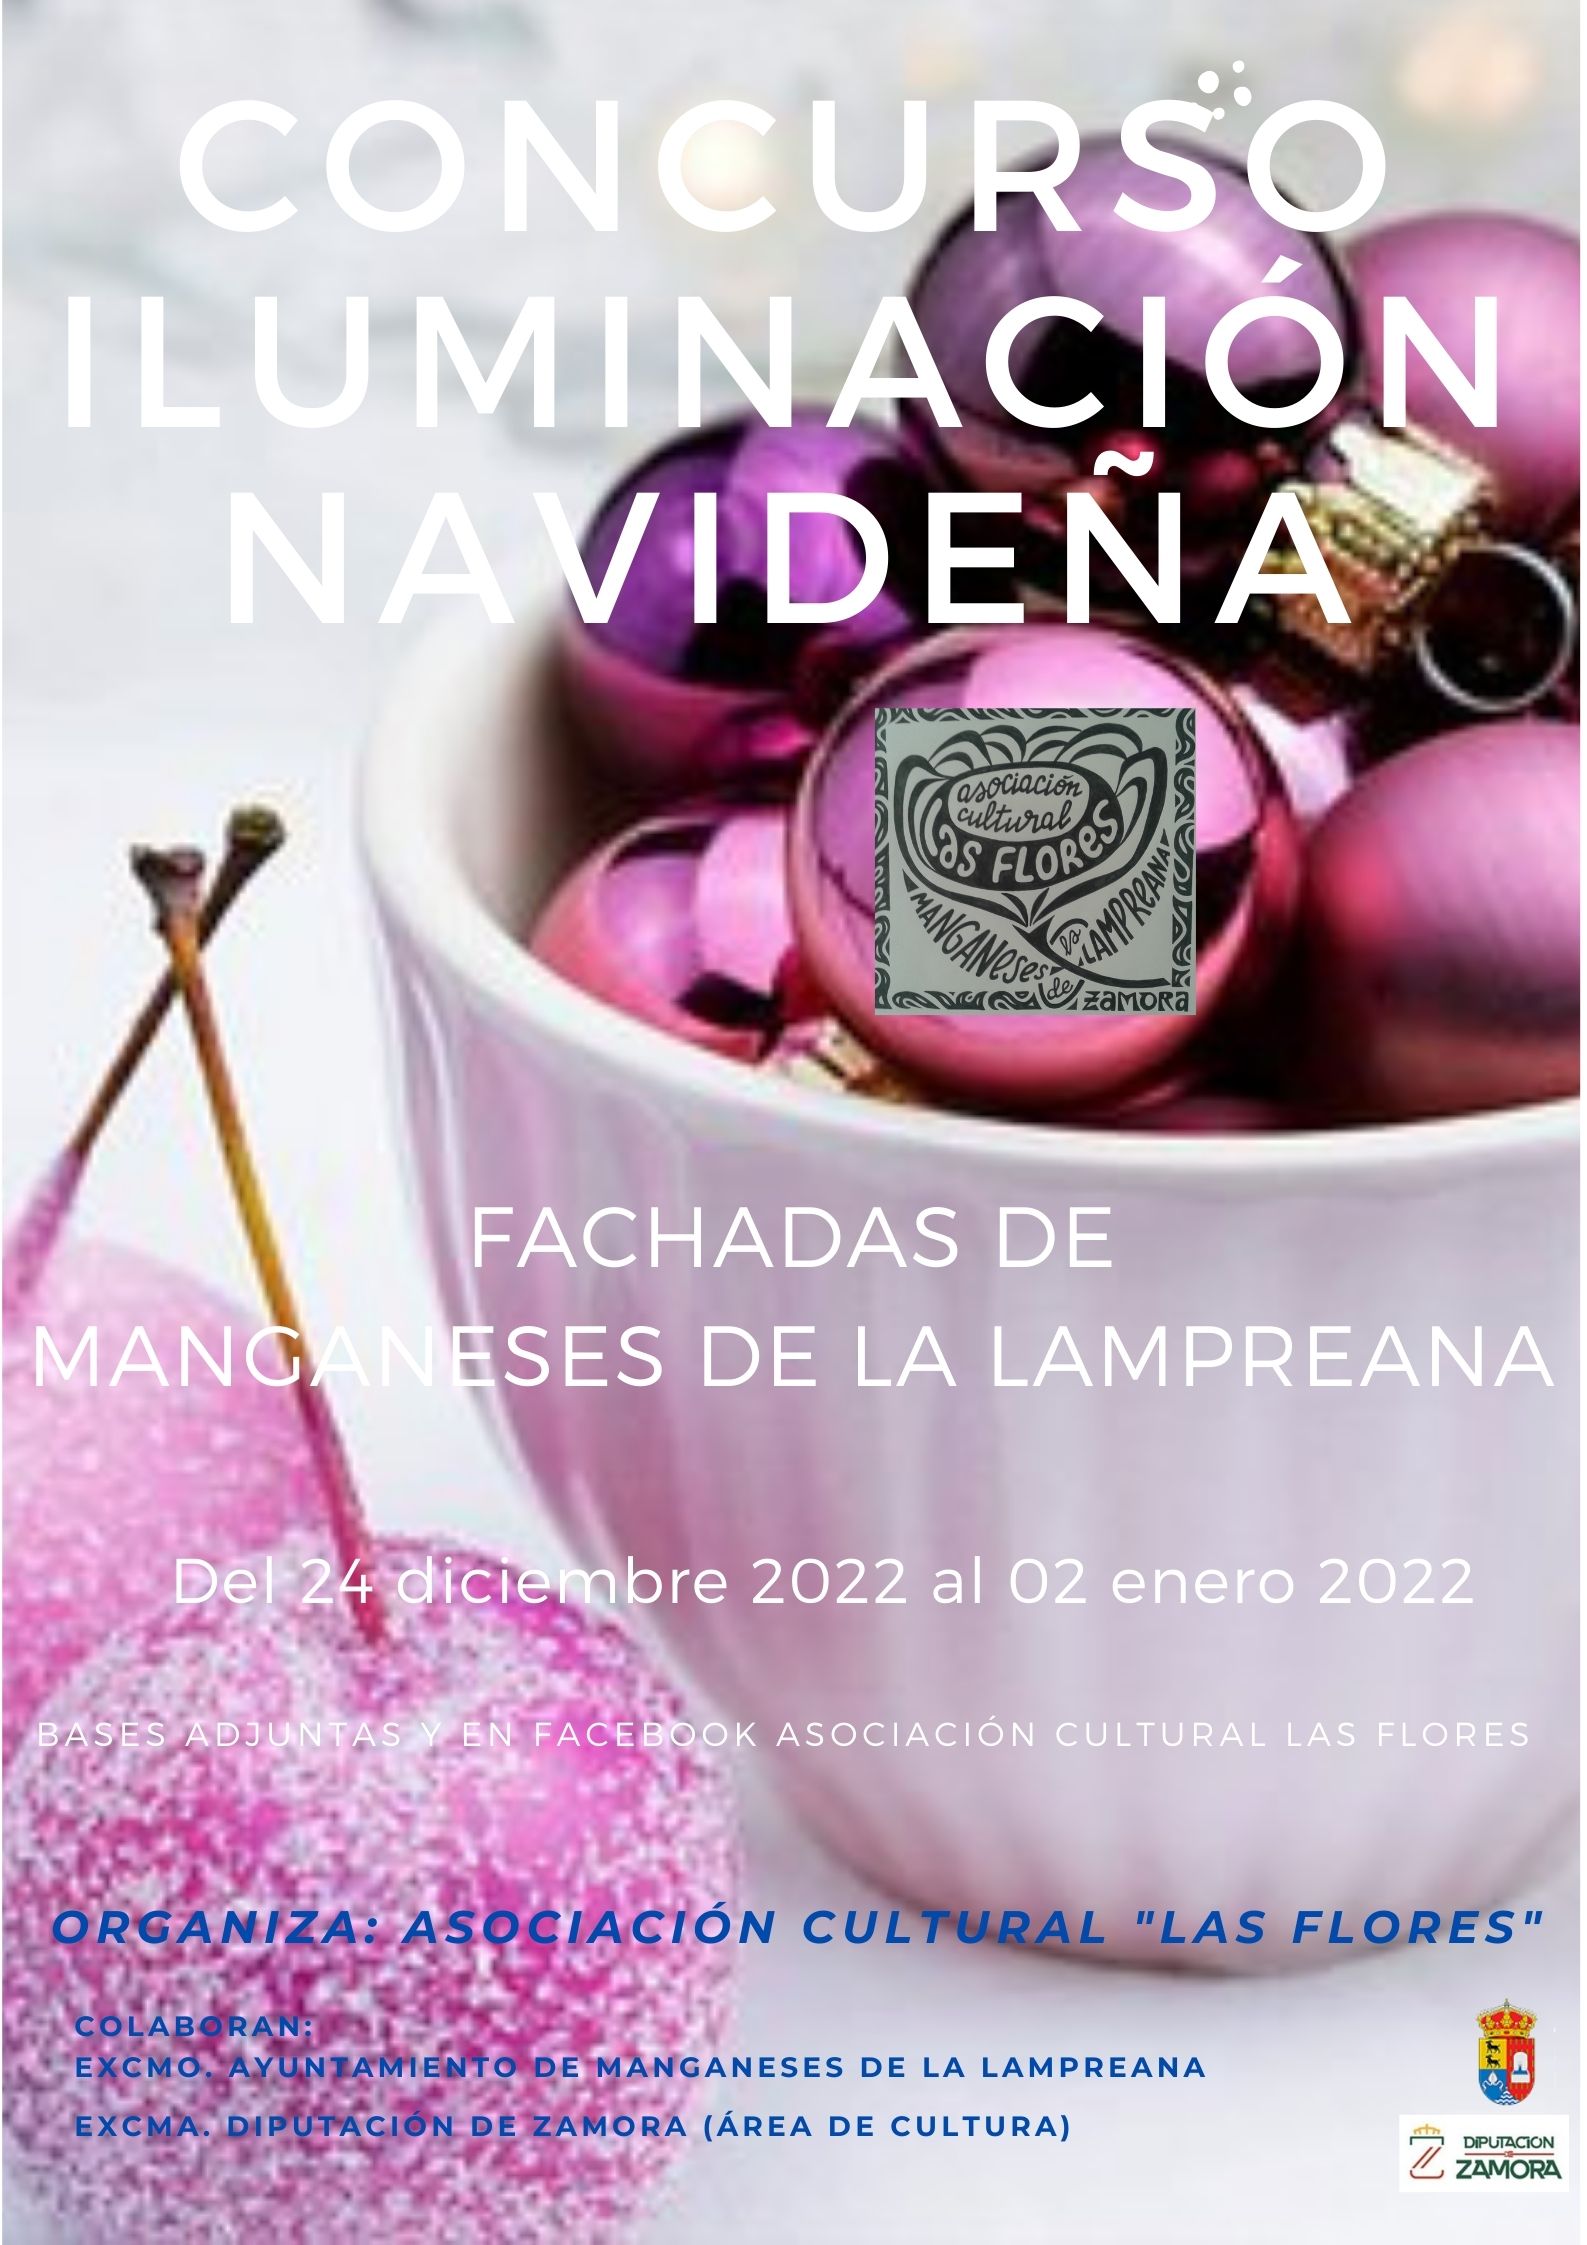 Concurso de Iluminación Navideña en Manganeses de la Lampreana.